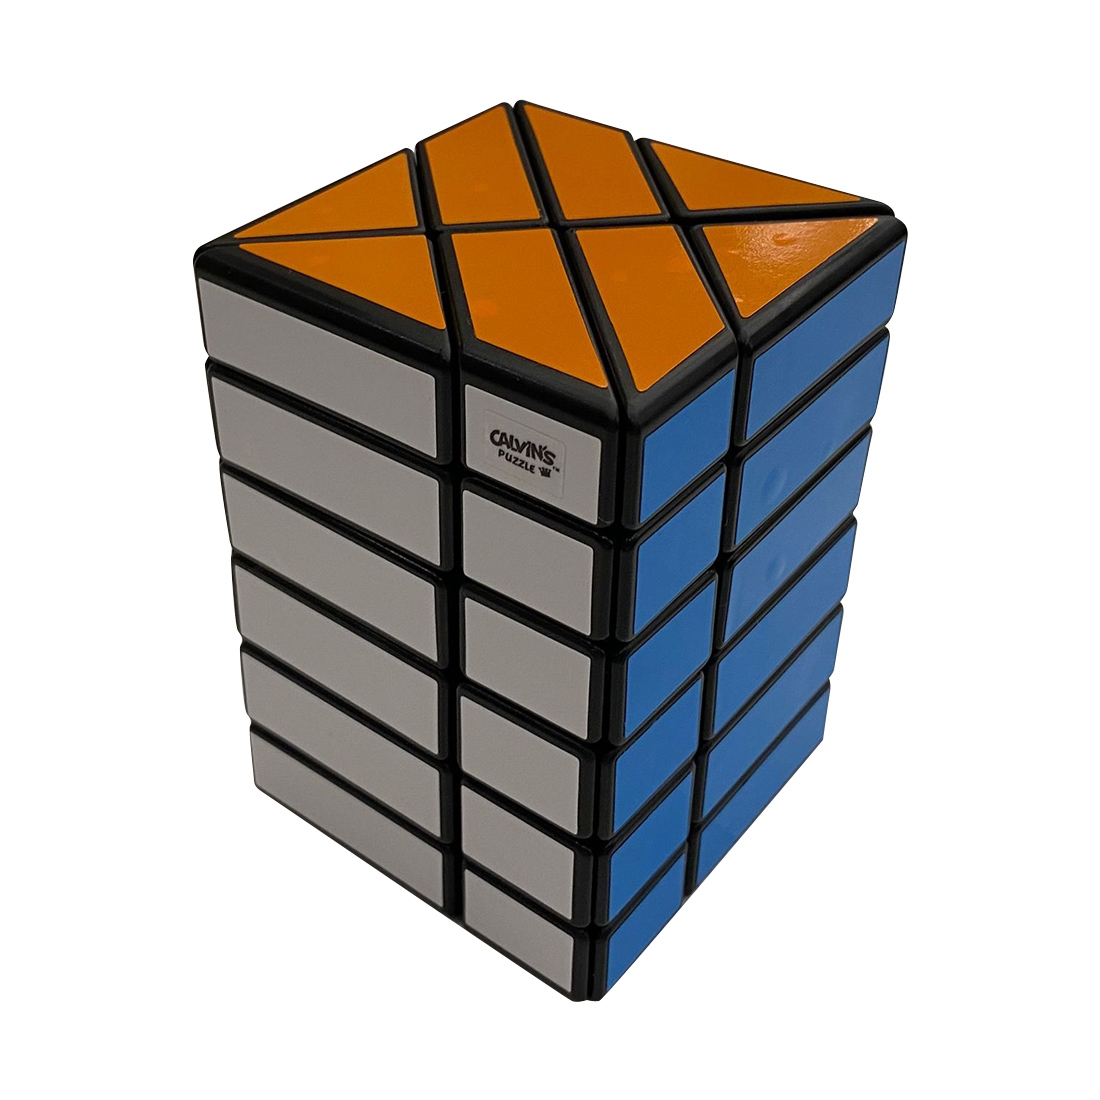 Calvin's Fisher Cuboid 2x4x6 Magic Cube (Black Body)